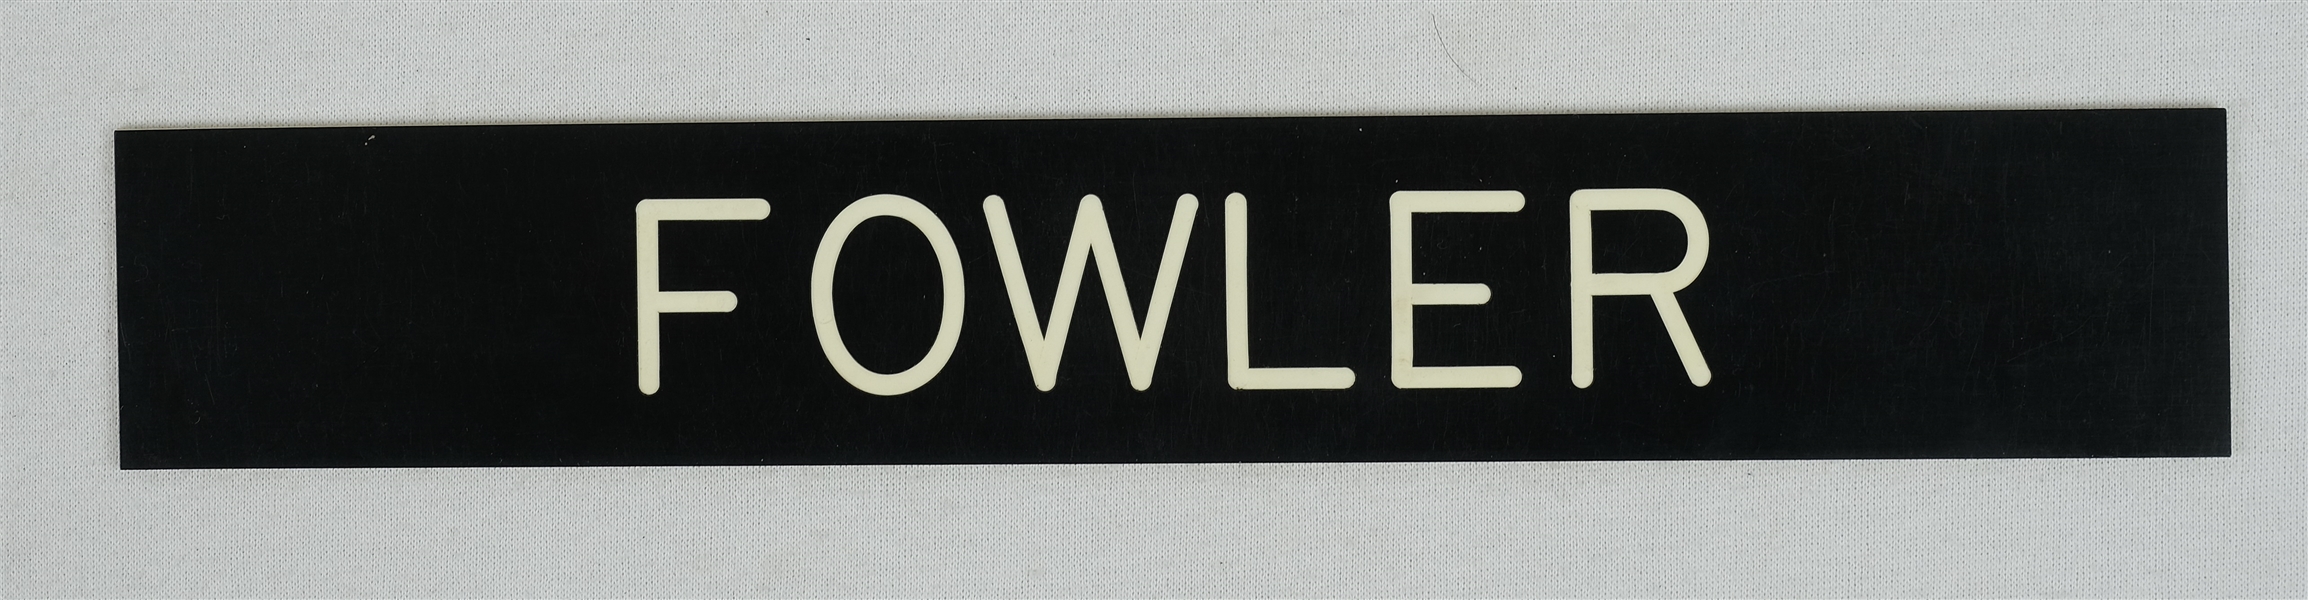 Art Fowler New York Yankees Locker Room Nameplate w/ Team Provenance